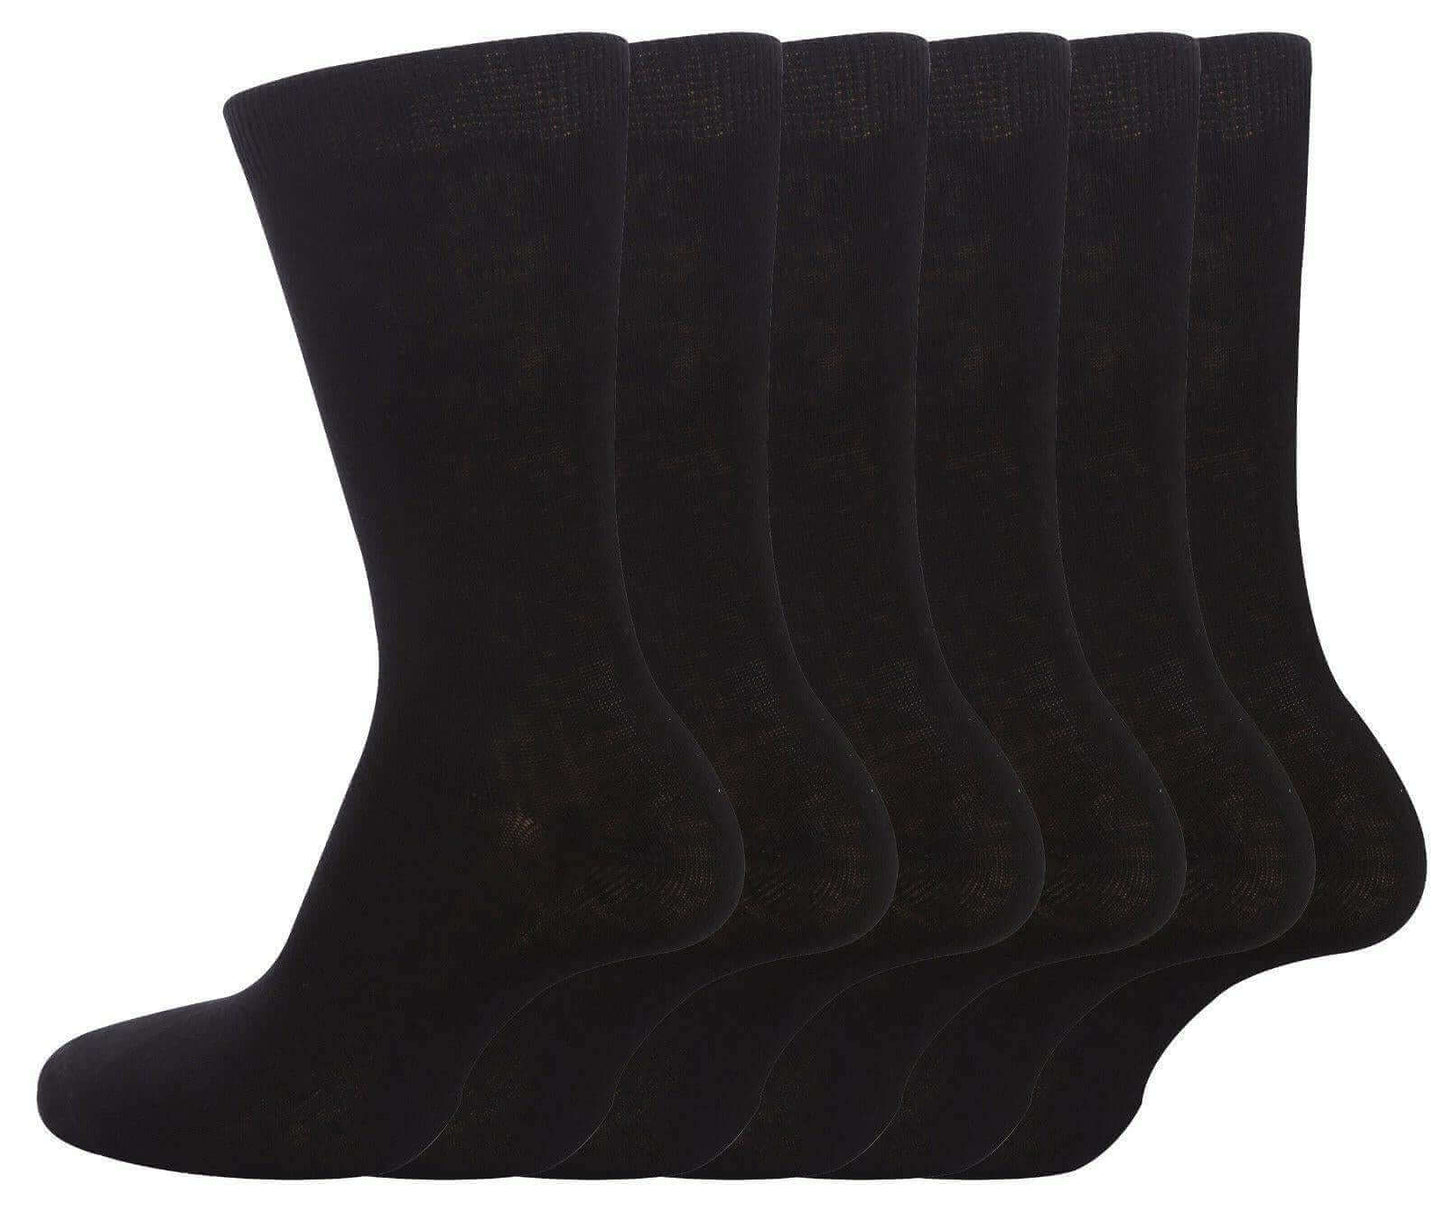 Pack Of 12 Cotton Rich Socks For School Boys And Girls. Buy now for £8.00. A Socks by Sock Stack. 12-3, 6-8, 9-12, black, boys, childrens, girls, grey, navy, school, socks, white.